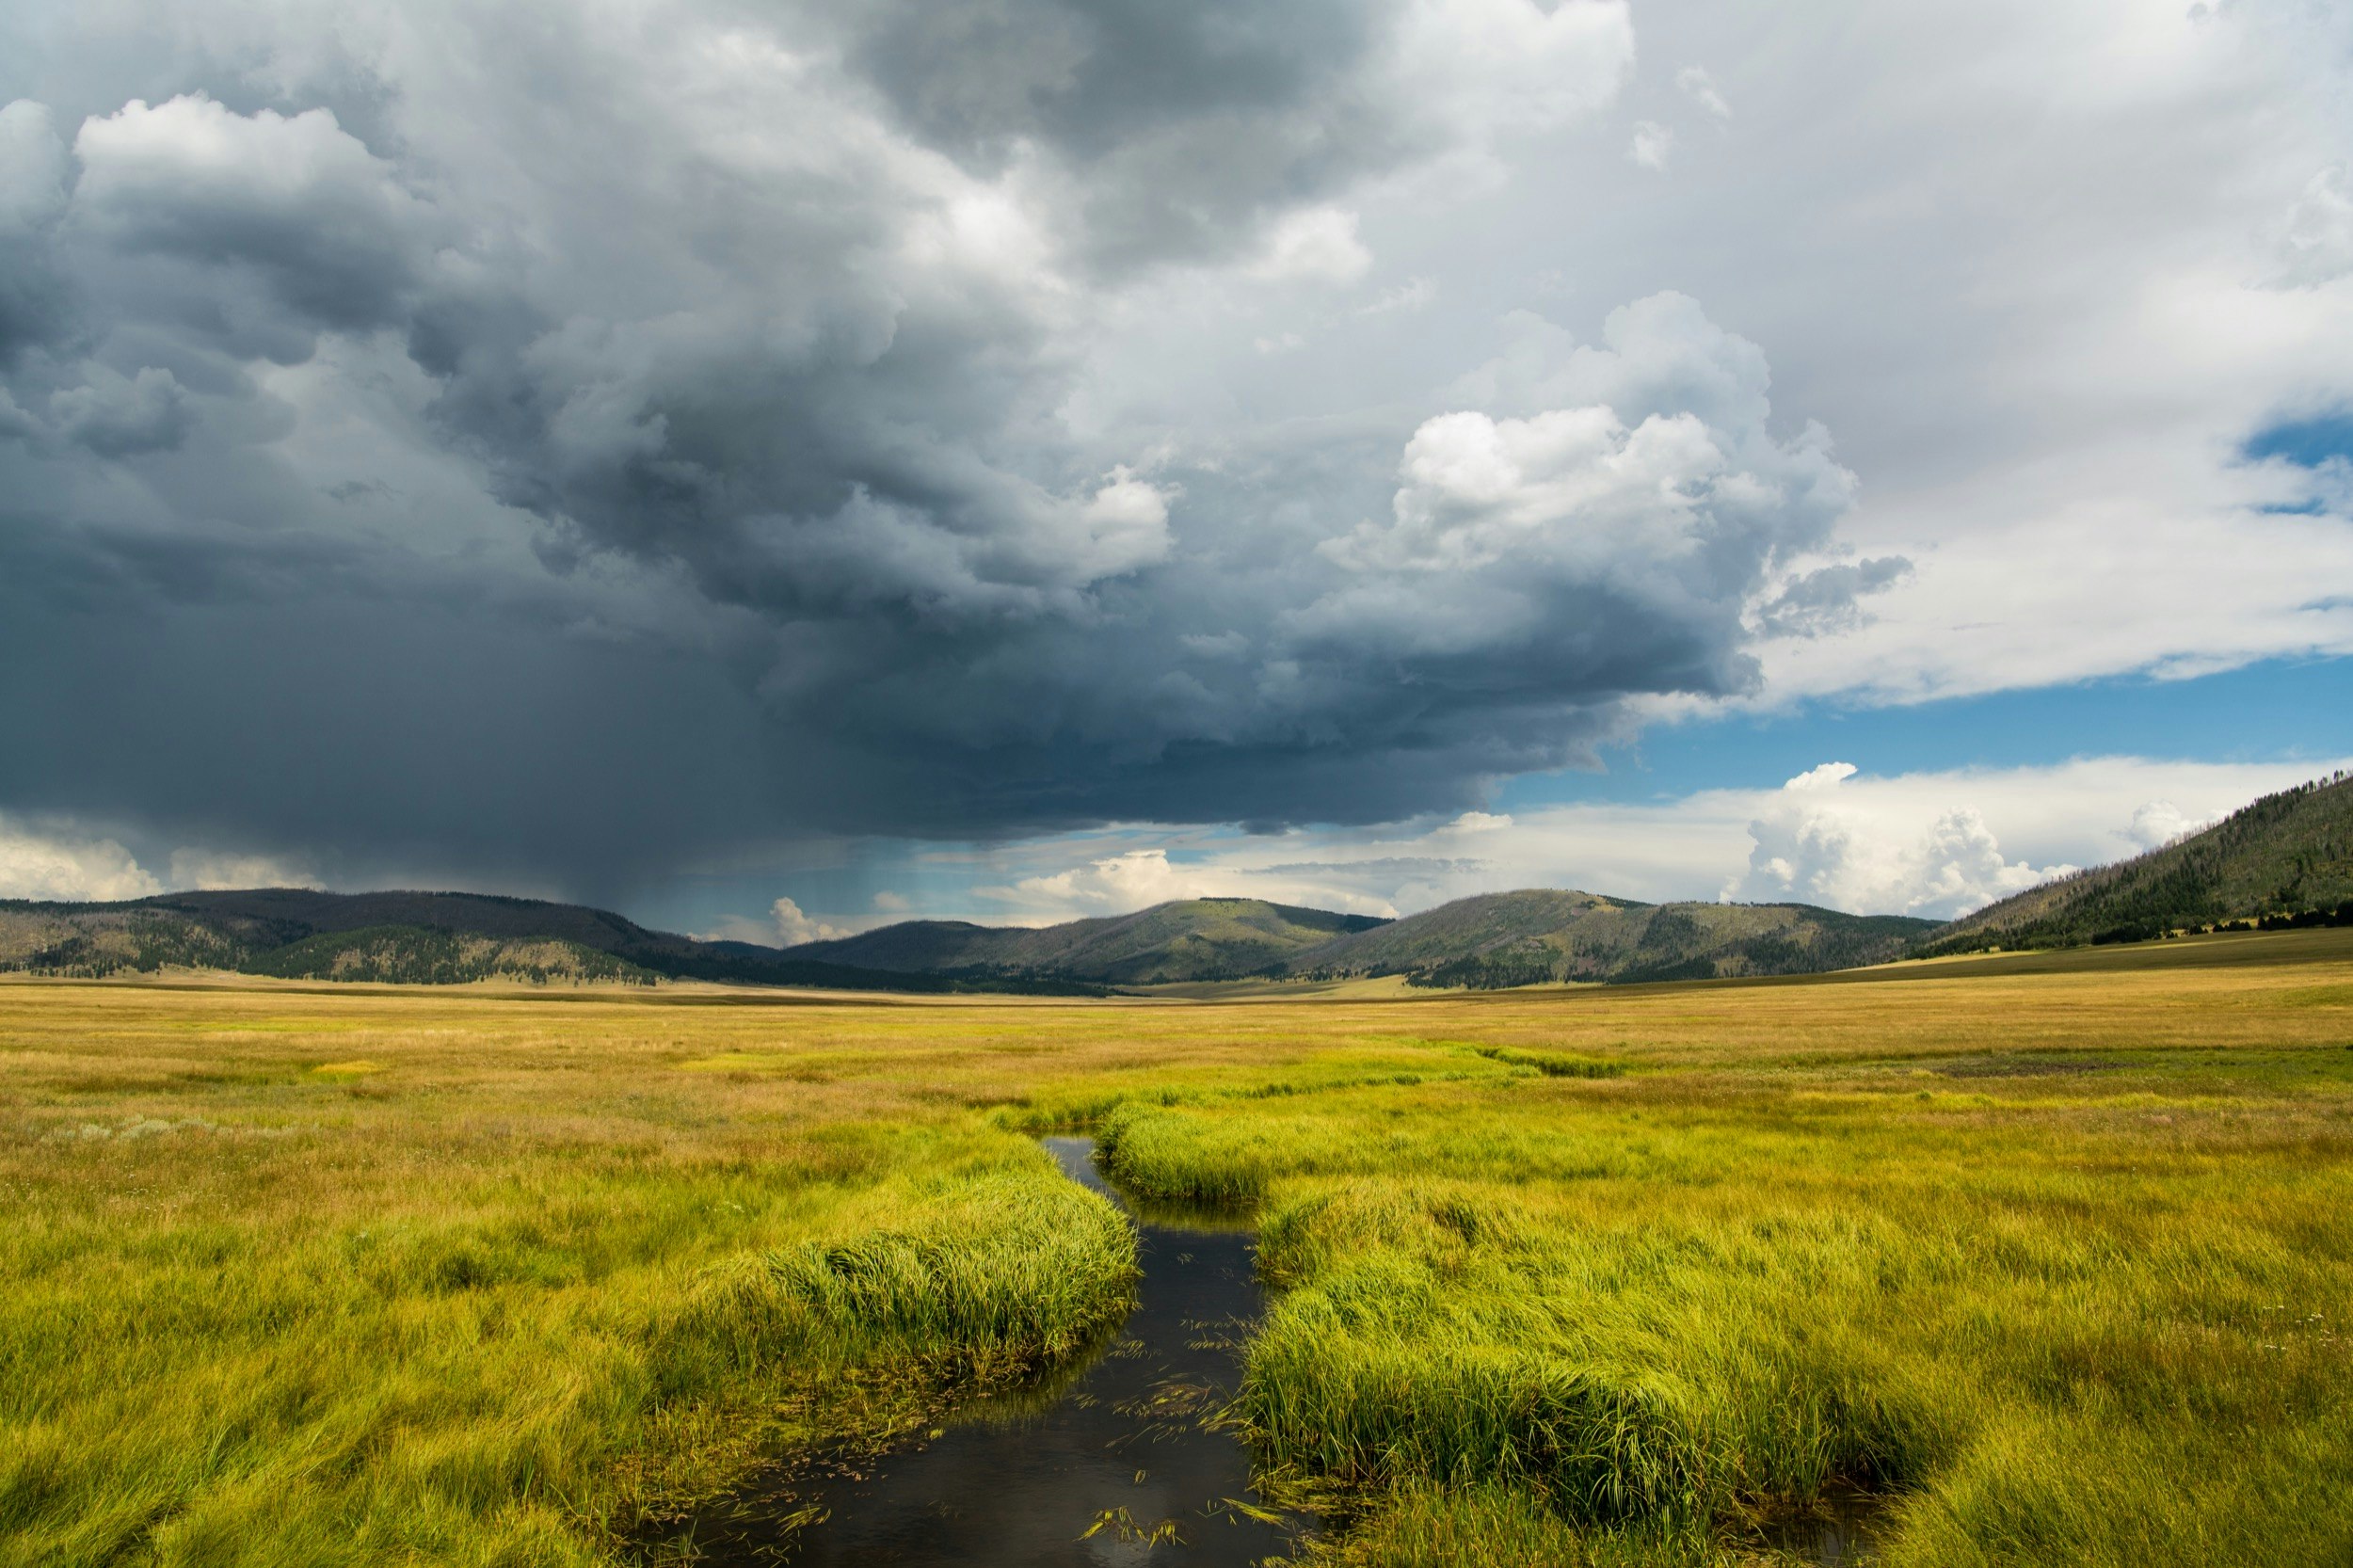 Storm over grasslands in Valles Caldera National Preserve, New Mexico